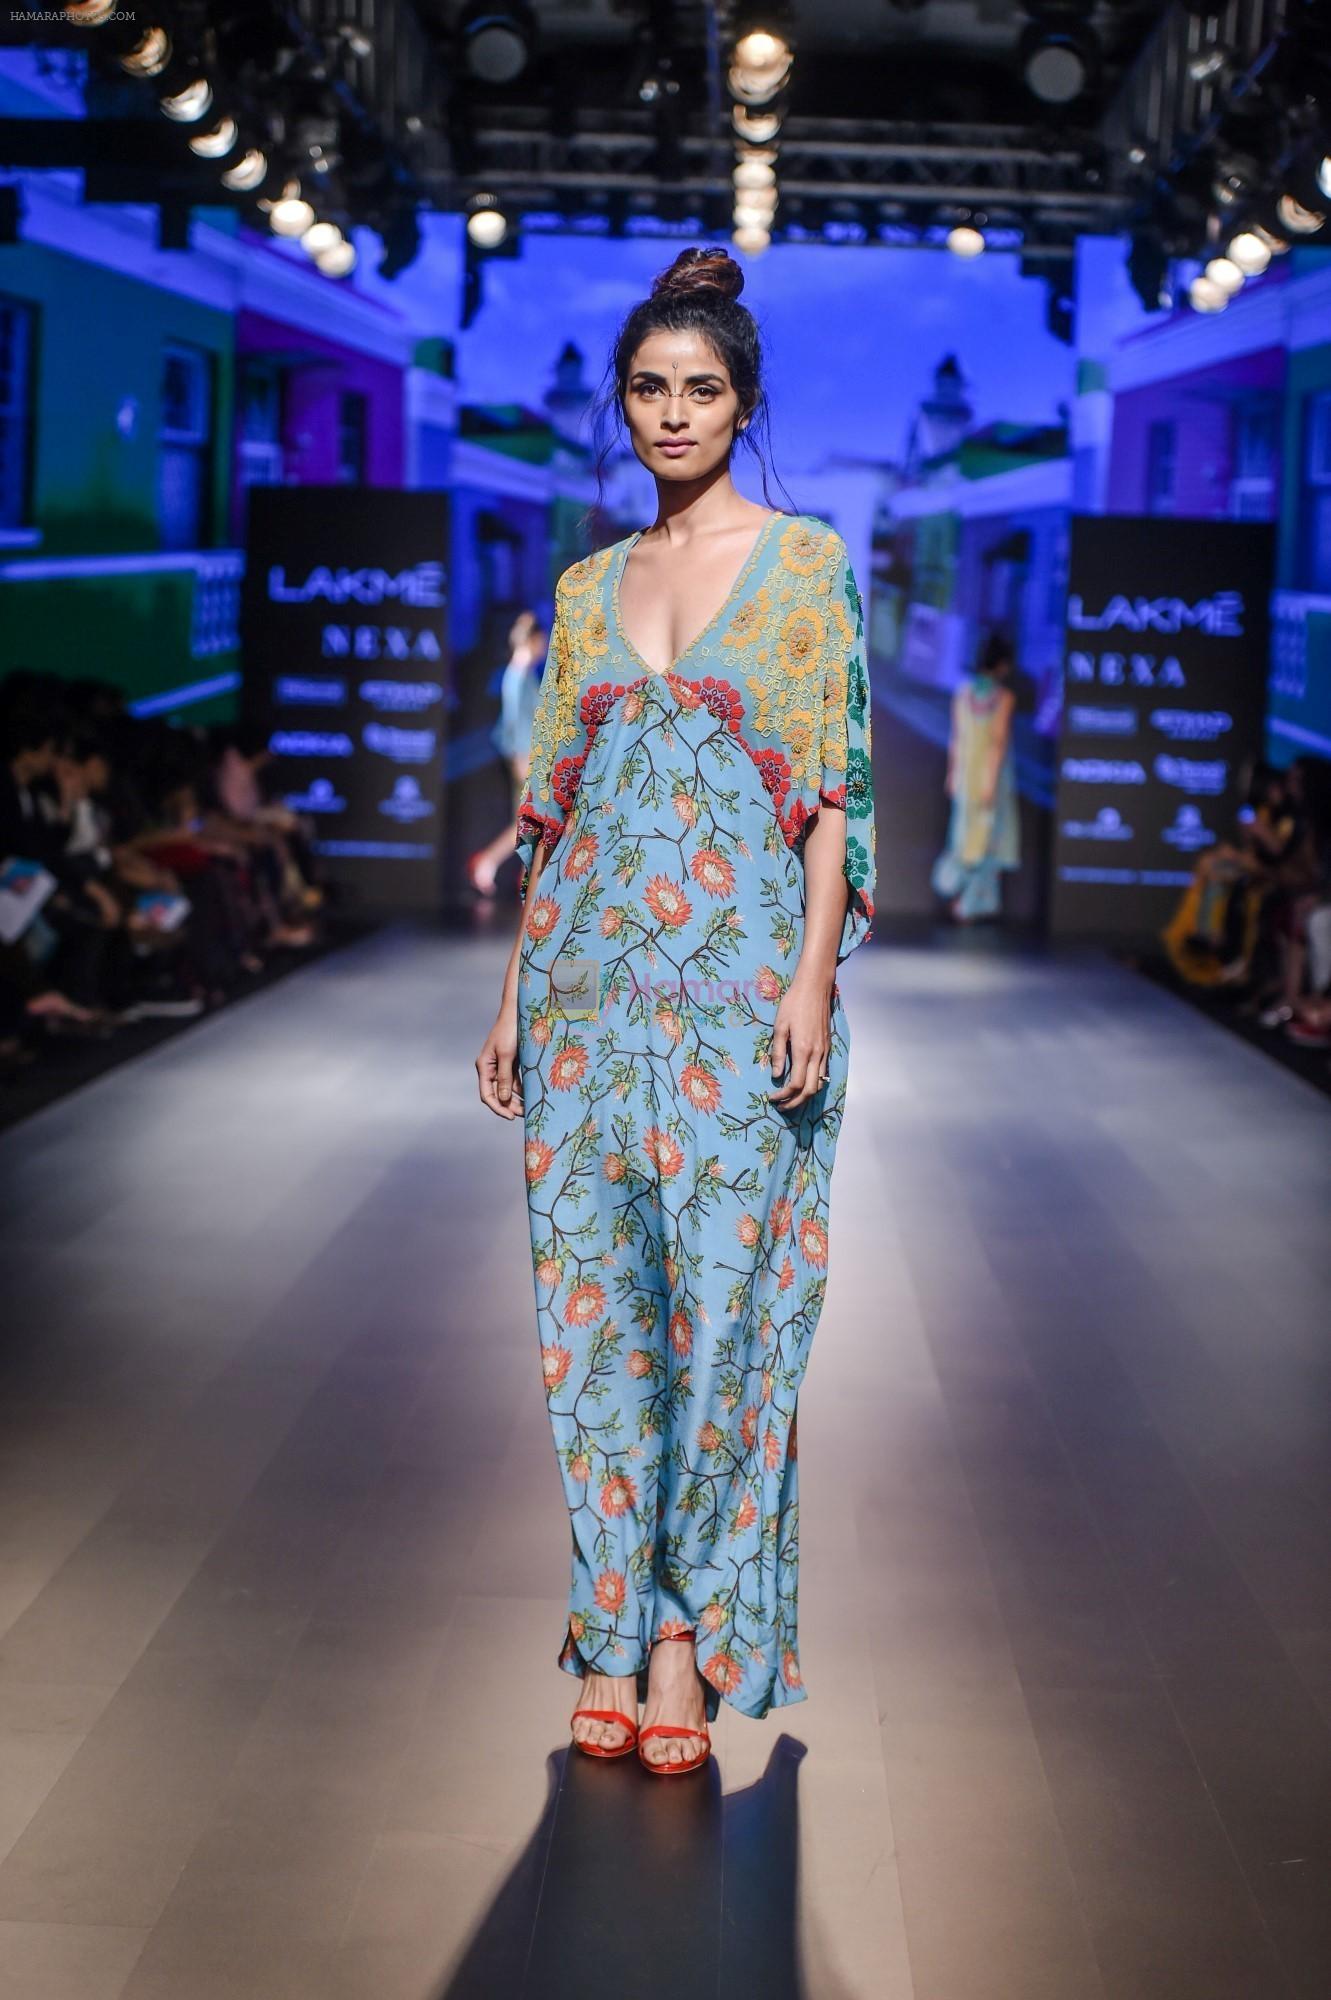 Model walk the ramp for Jayanti Reddy at Lakme Fashion Week on 26th Aug 2018